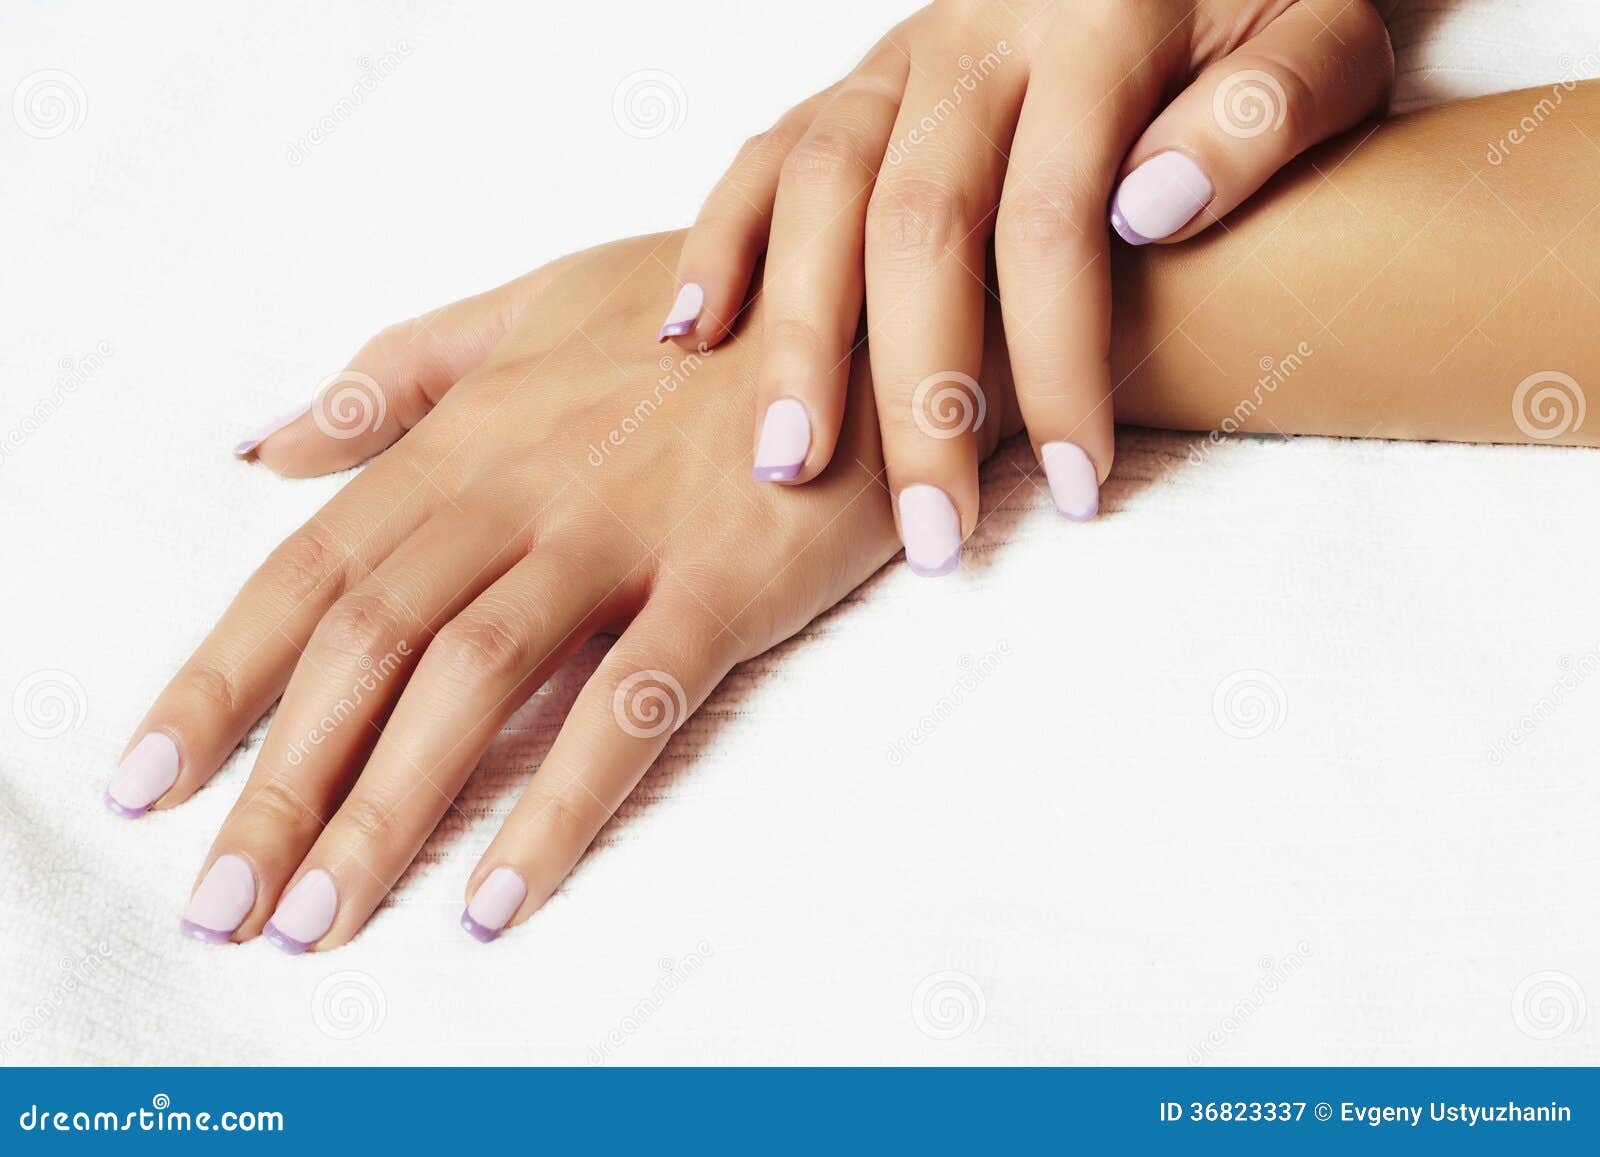 manicure.female hands.beauty salon.shellac polish